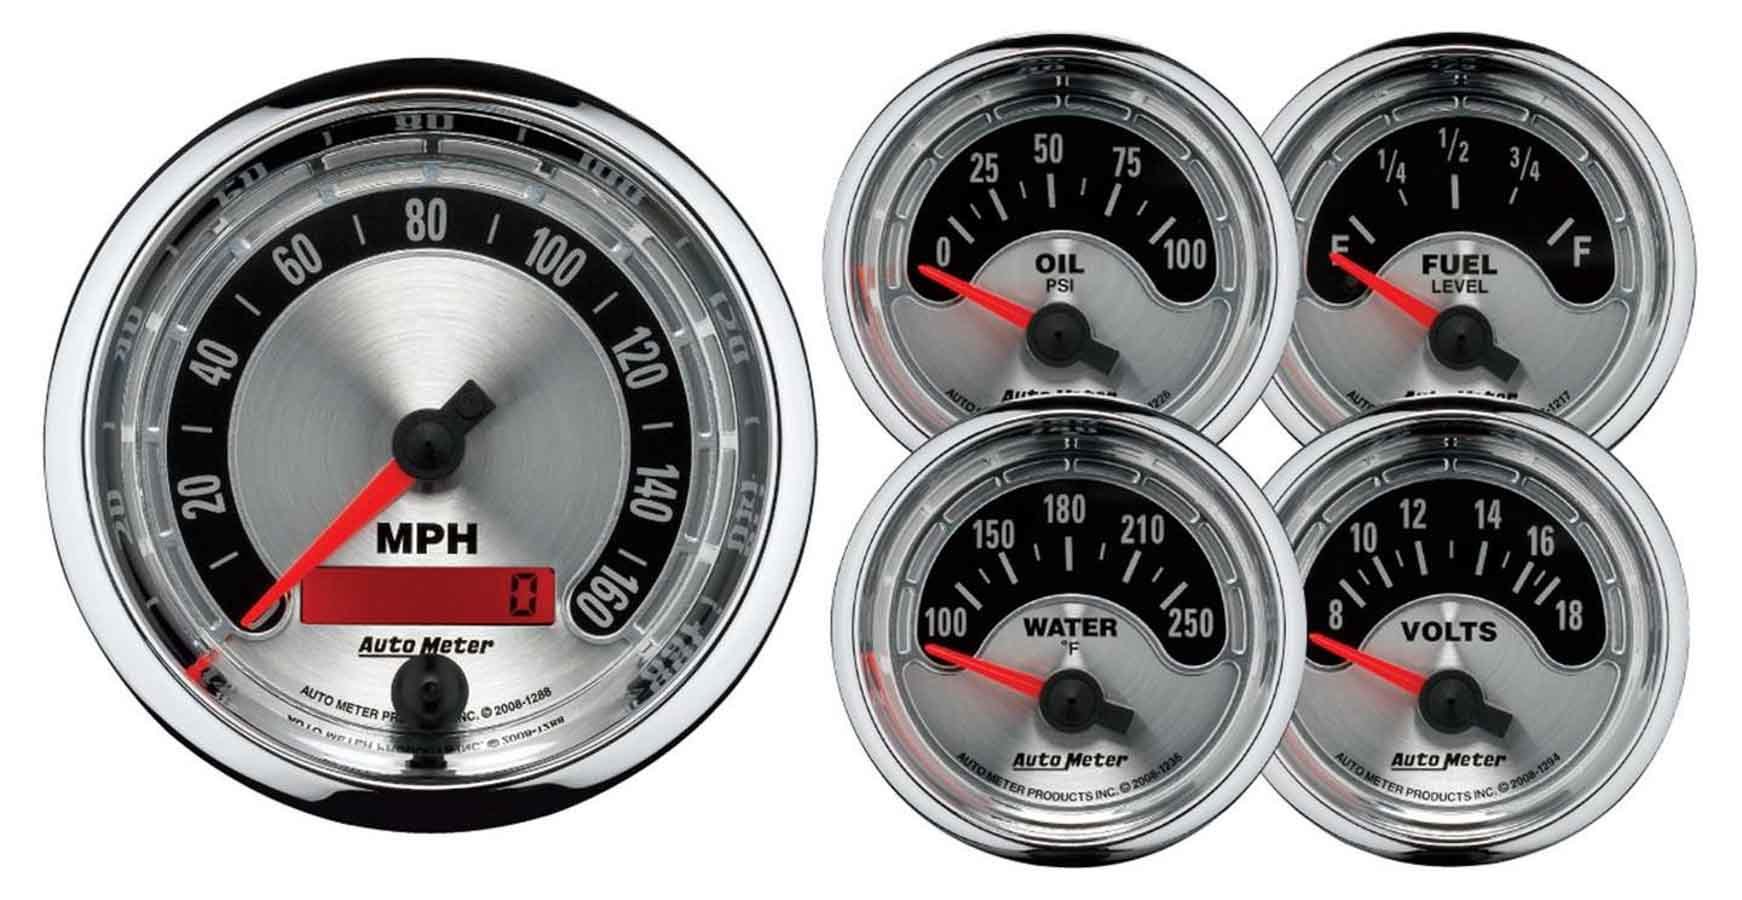 Auto Meter 1202 Gauge Kit, American Muscle, Analog, Fuel Level / Oil Pressure / Speedometer / Voltmeter / Water Temperature, Brushed / Black Face, Kit